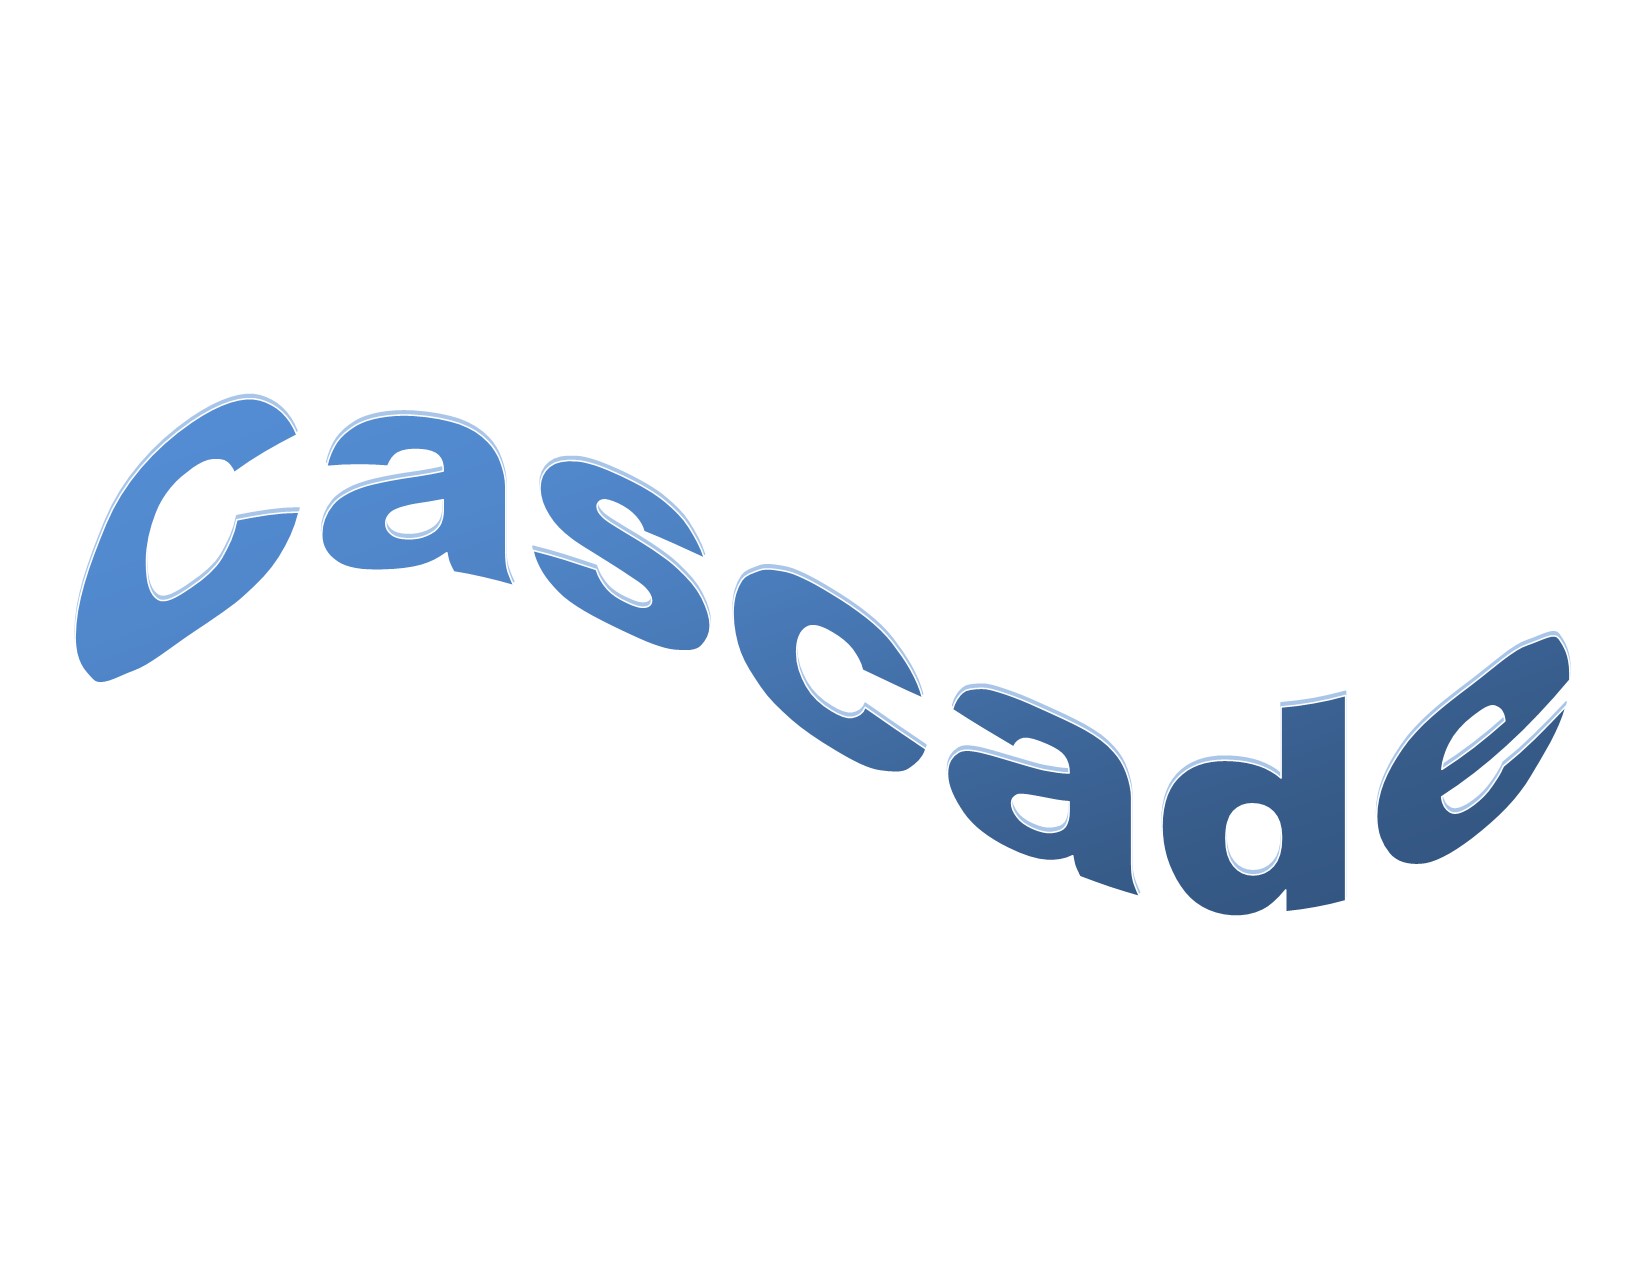 Cascade’s songs